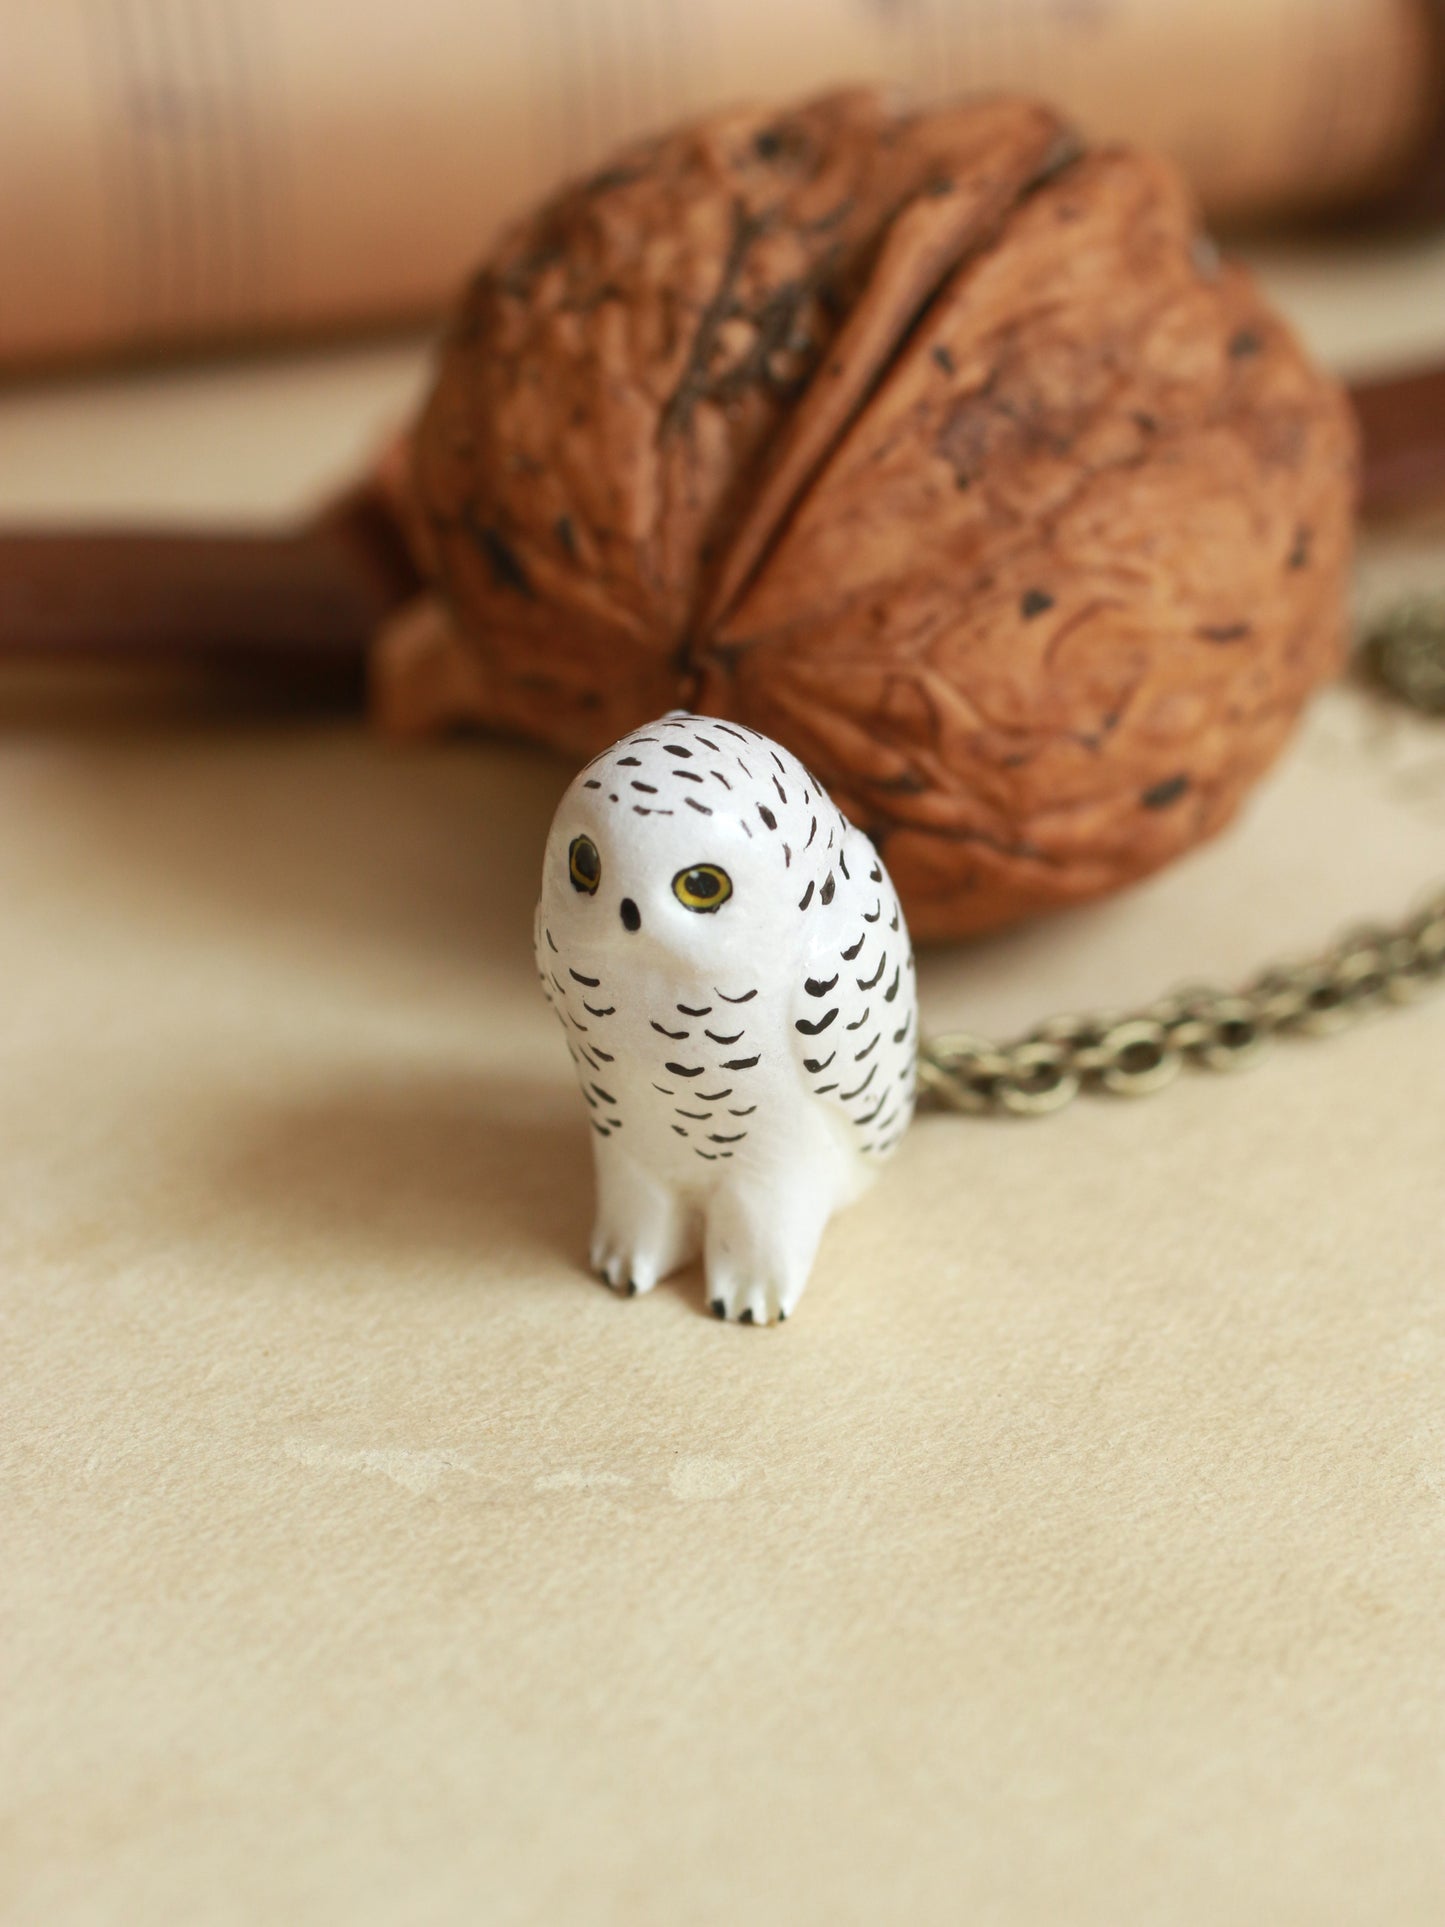 Snowy owl necklace in a nutshell box